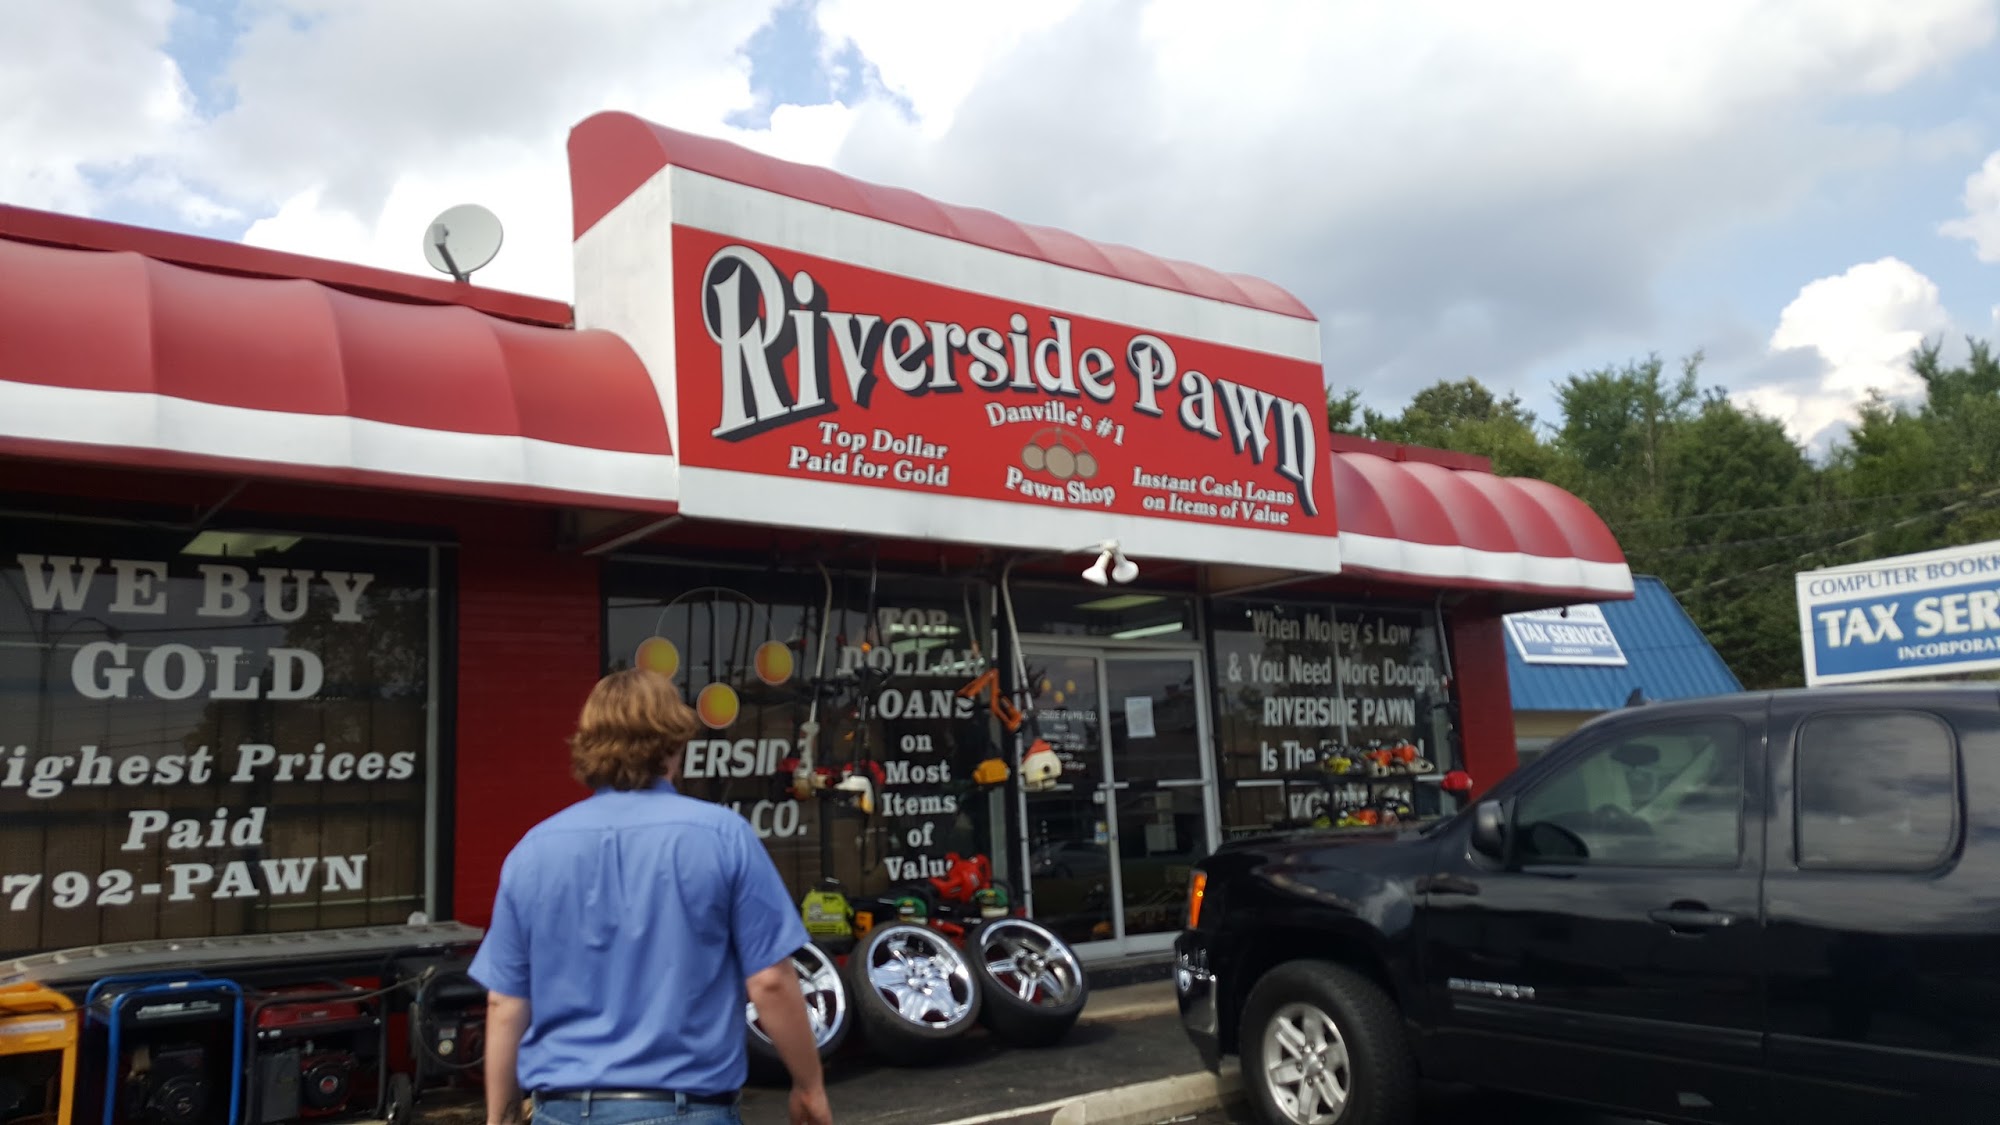 Riverside Pawn & Jewelry